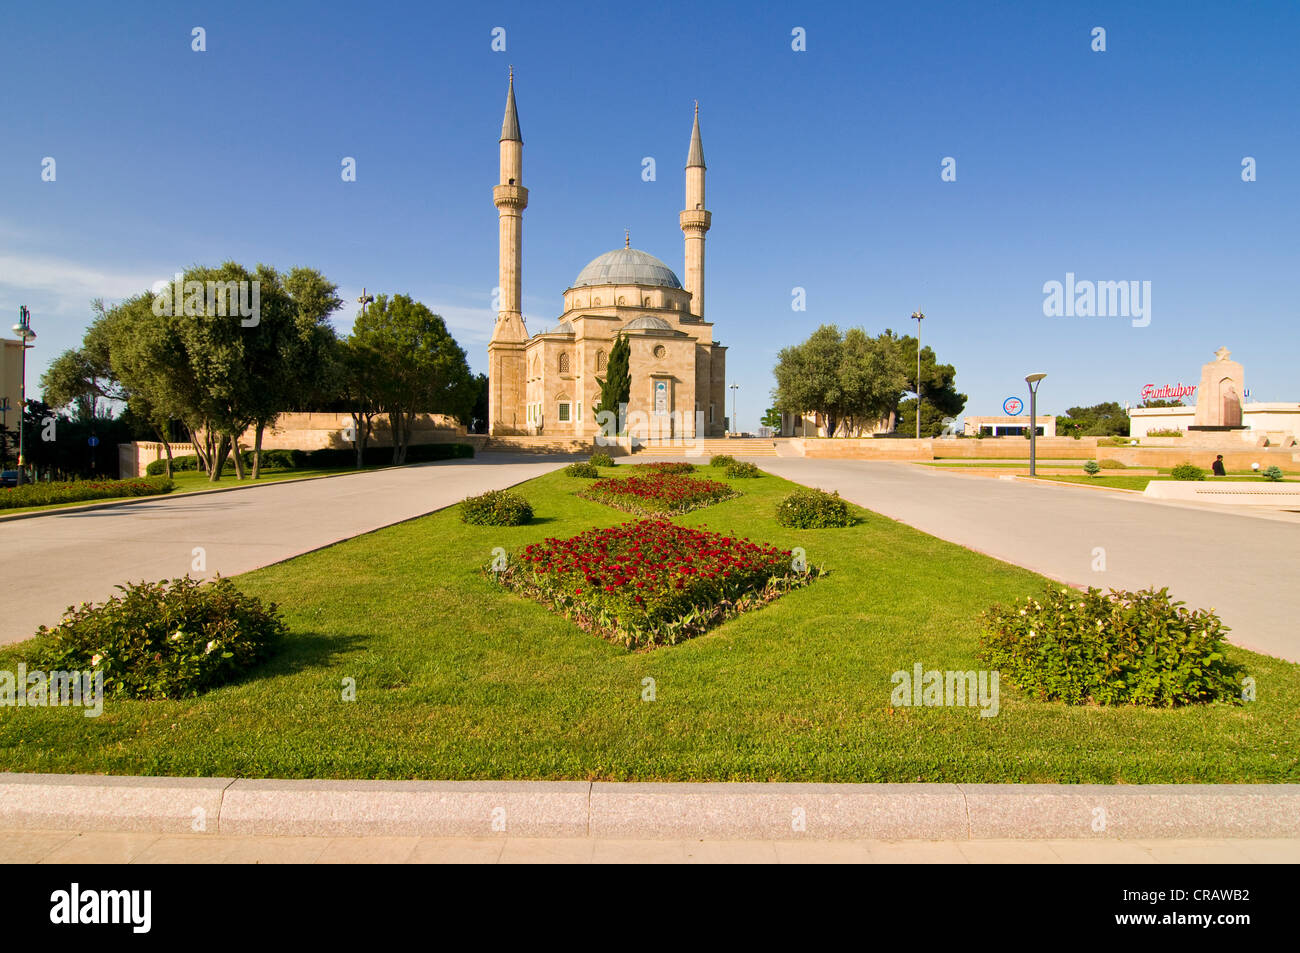 Mosque with minarets, Baku, Azerbaijan, Middle East Stock Photo